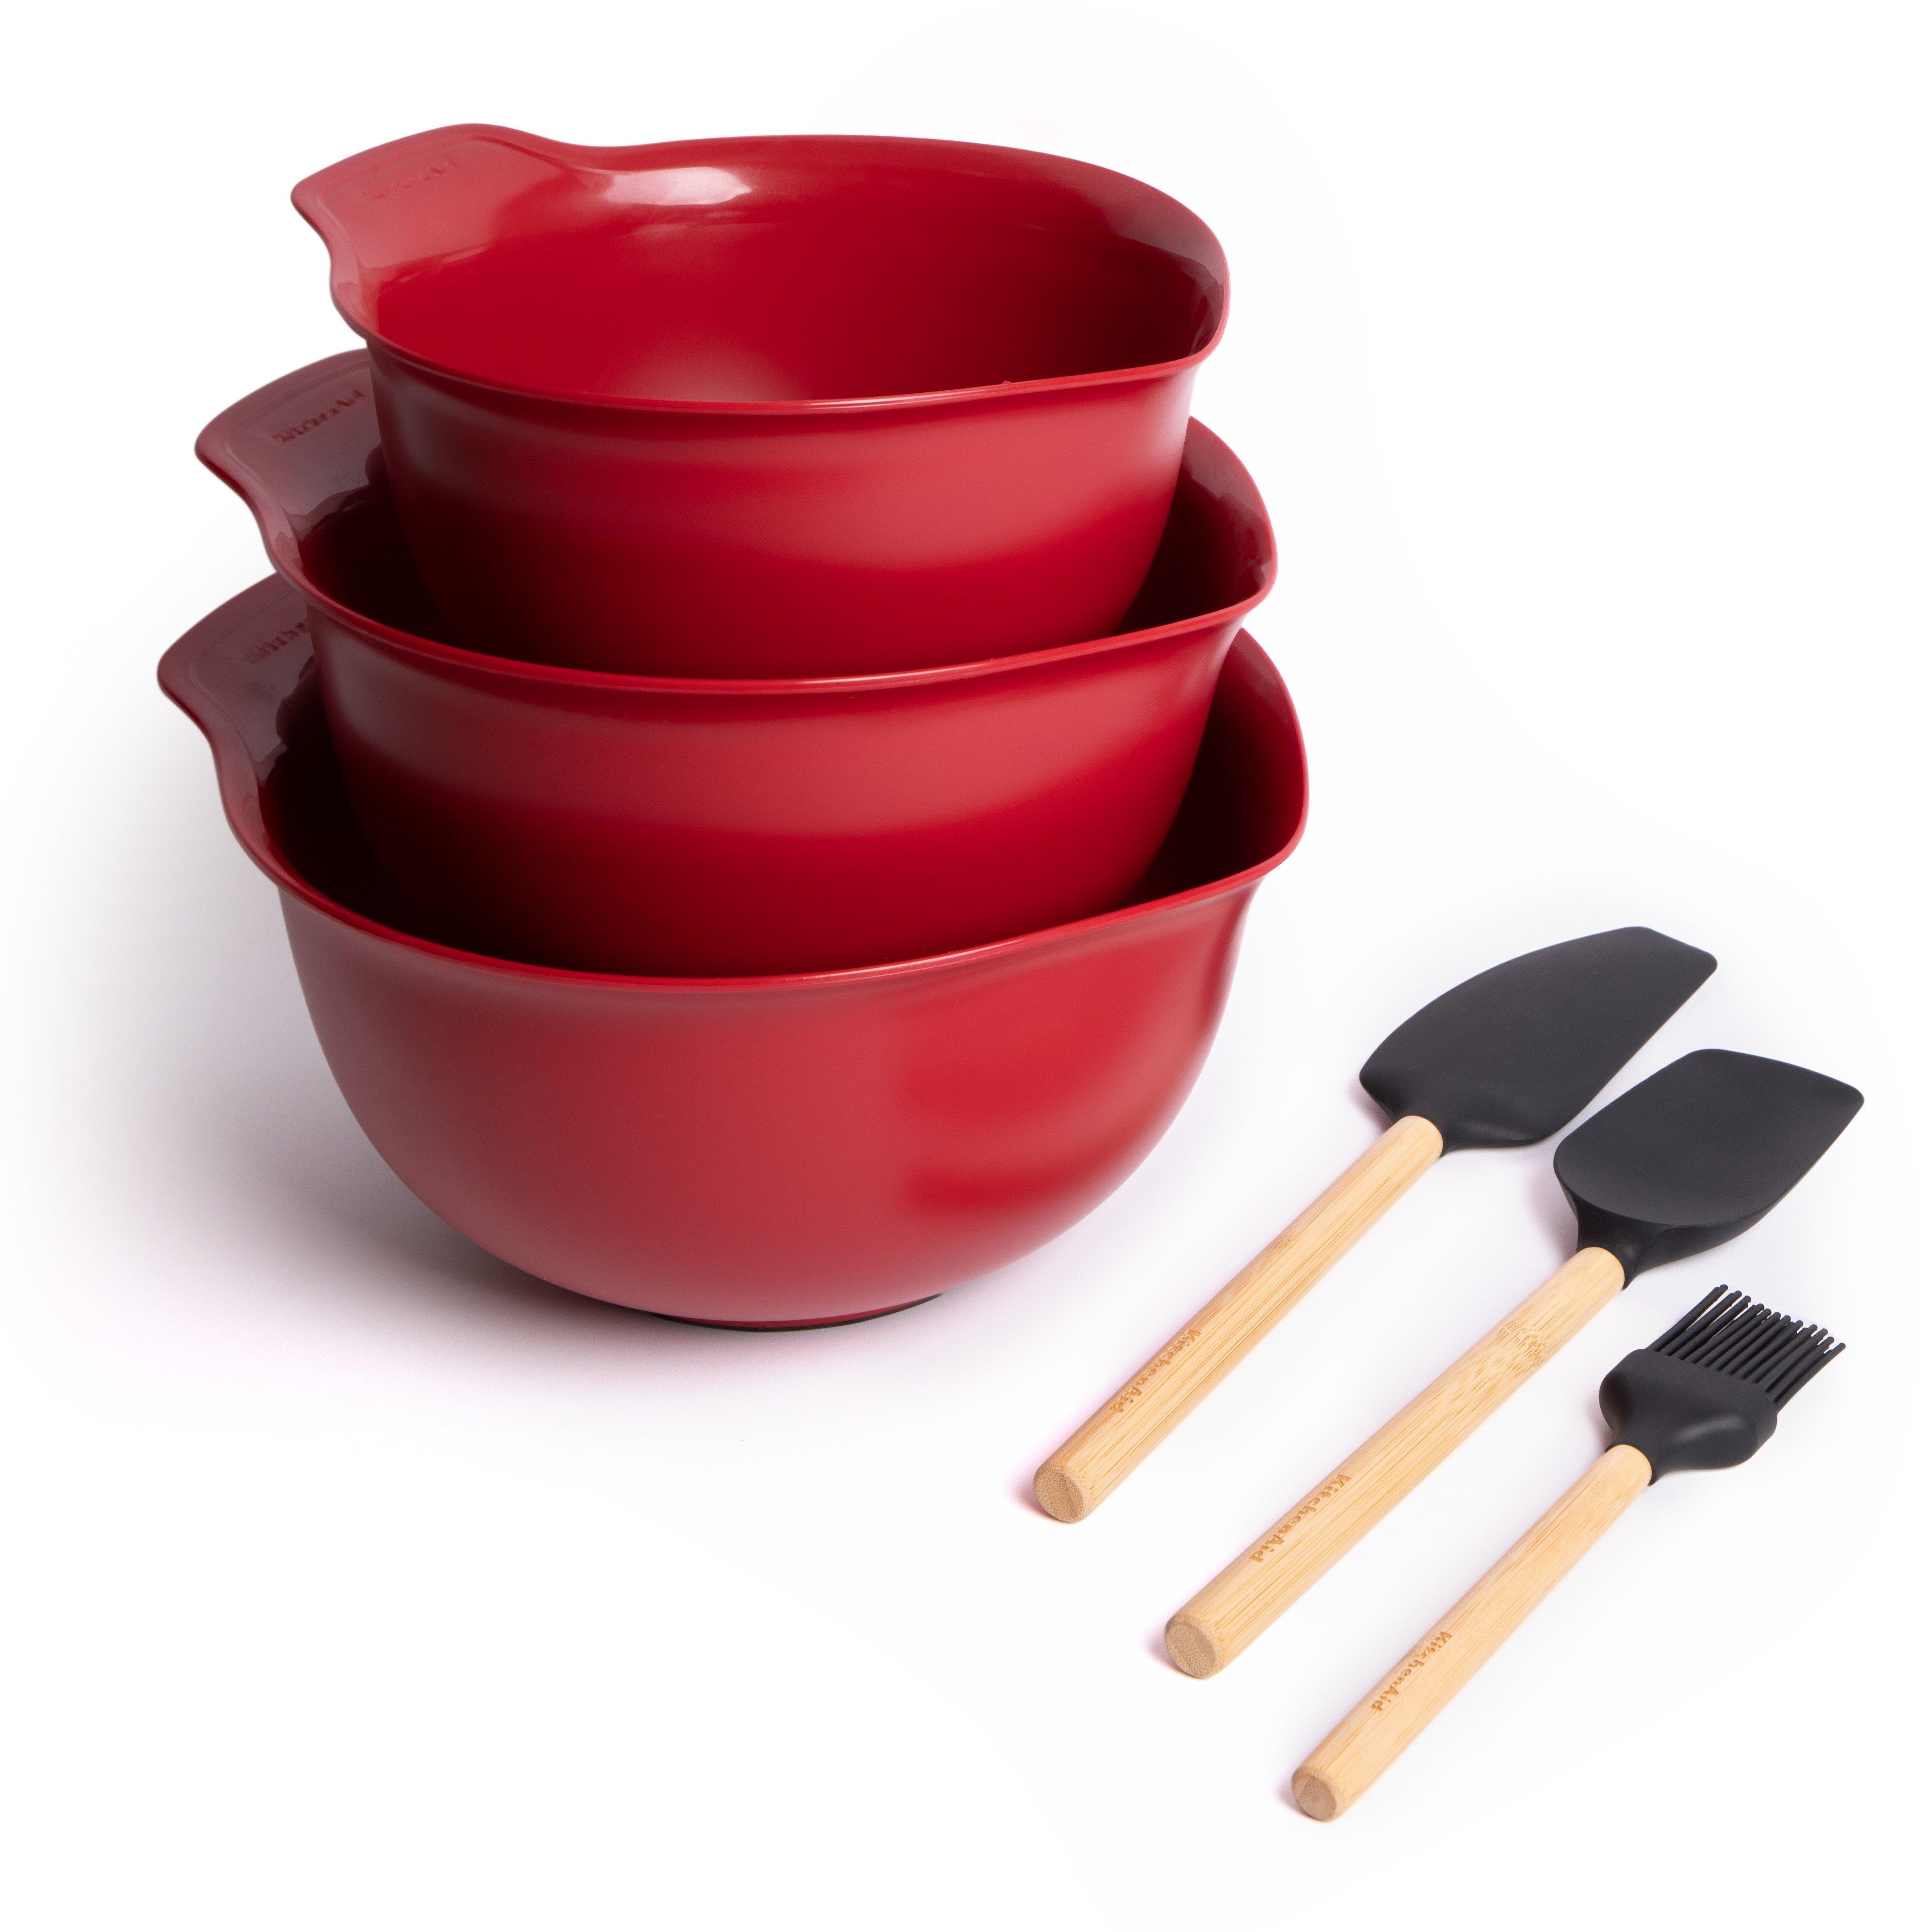 6pc Baking Set - 2x Spatula, Pastry Brush, 3x Red Nesting Mixing Bowls